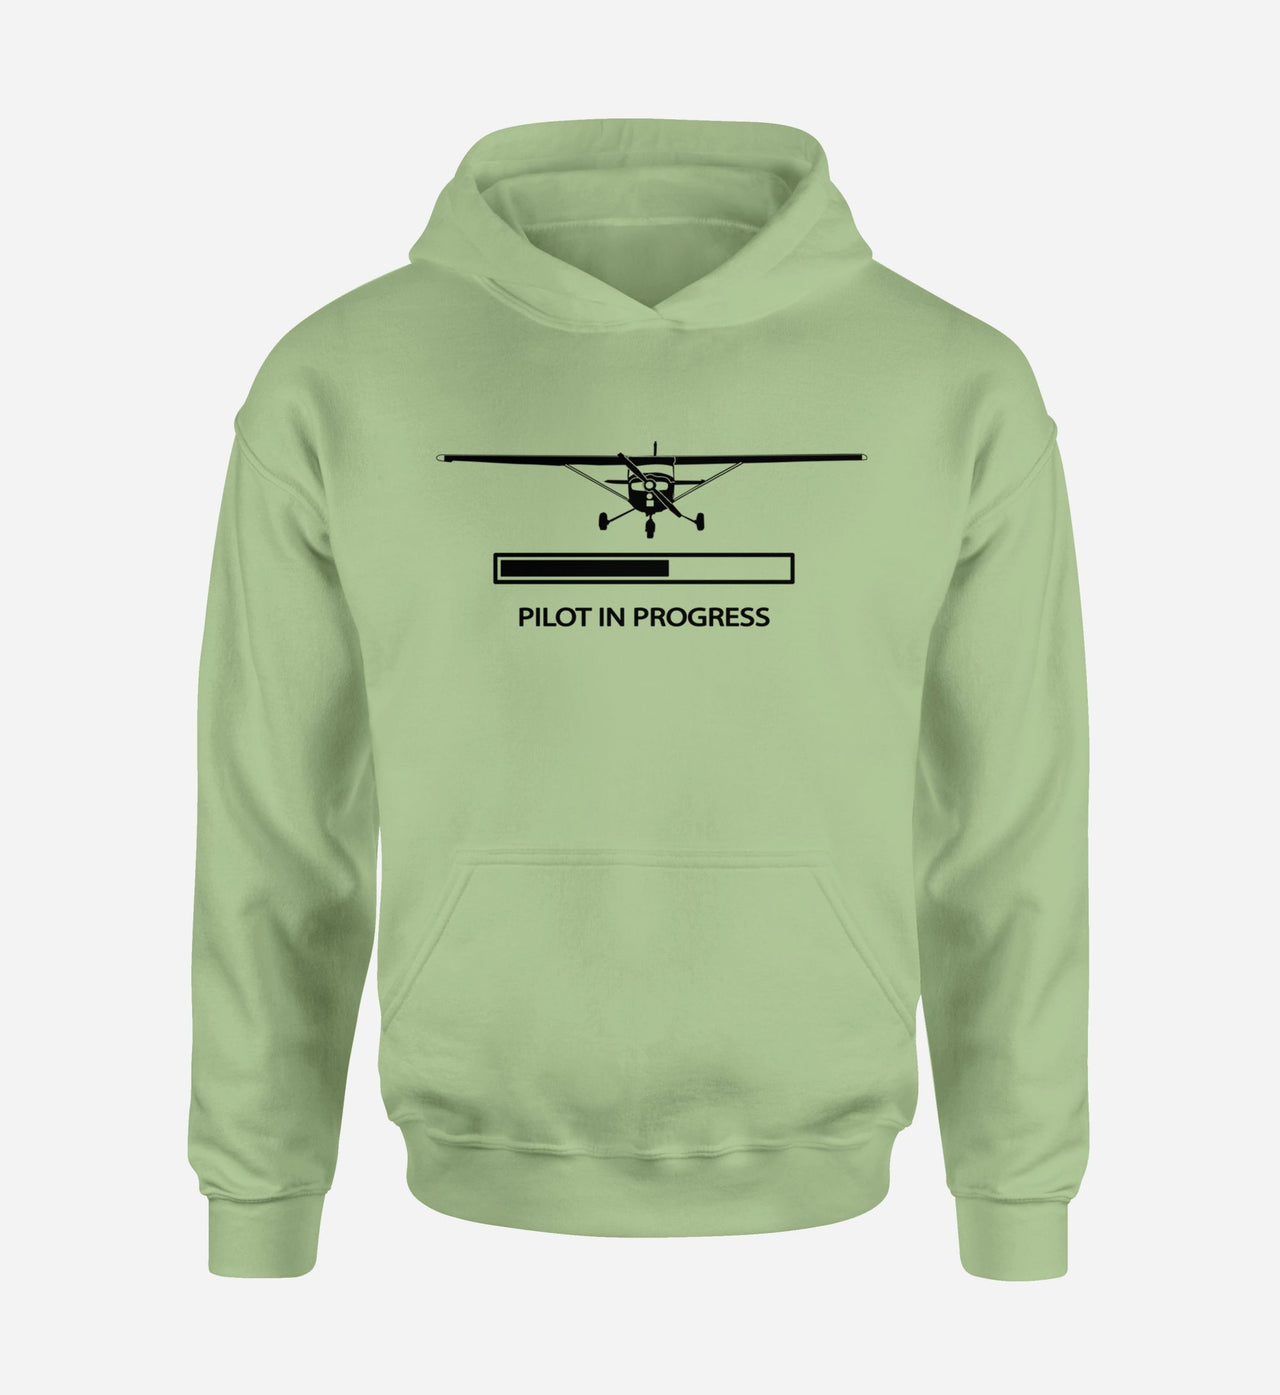 Pilot In Progress (Cessna) Designed Hoodies